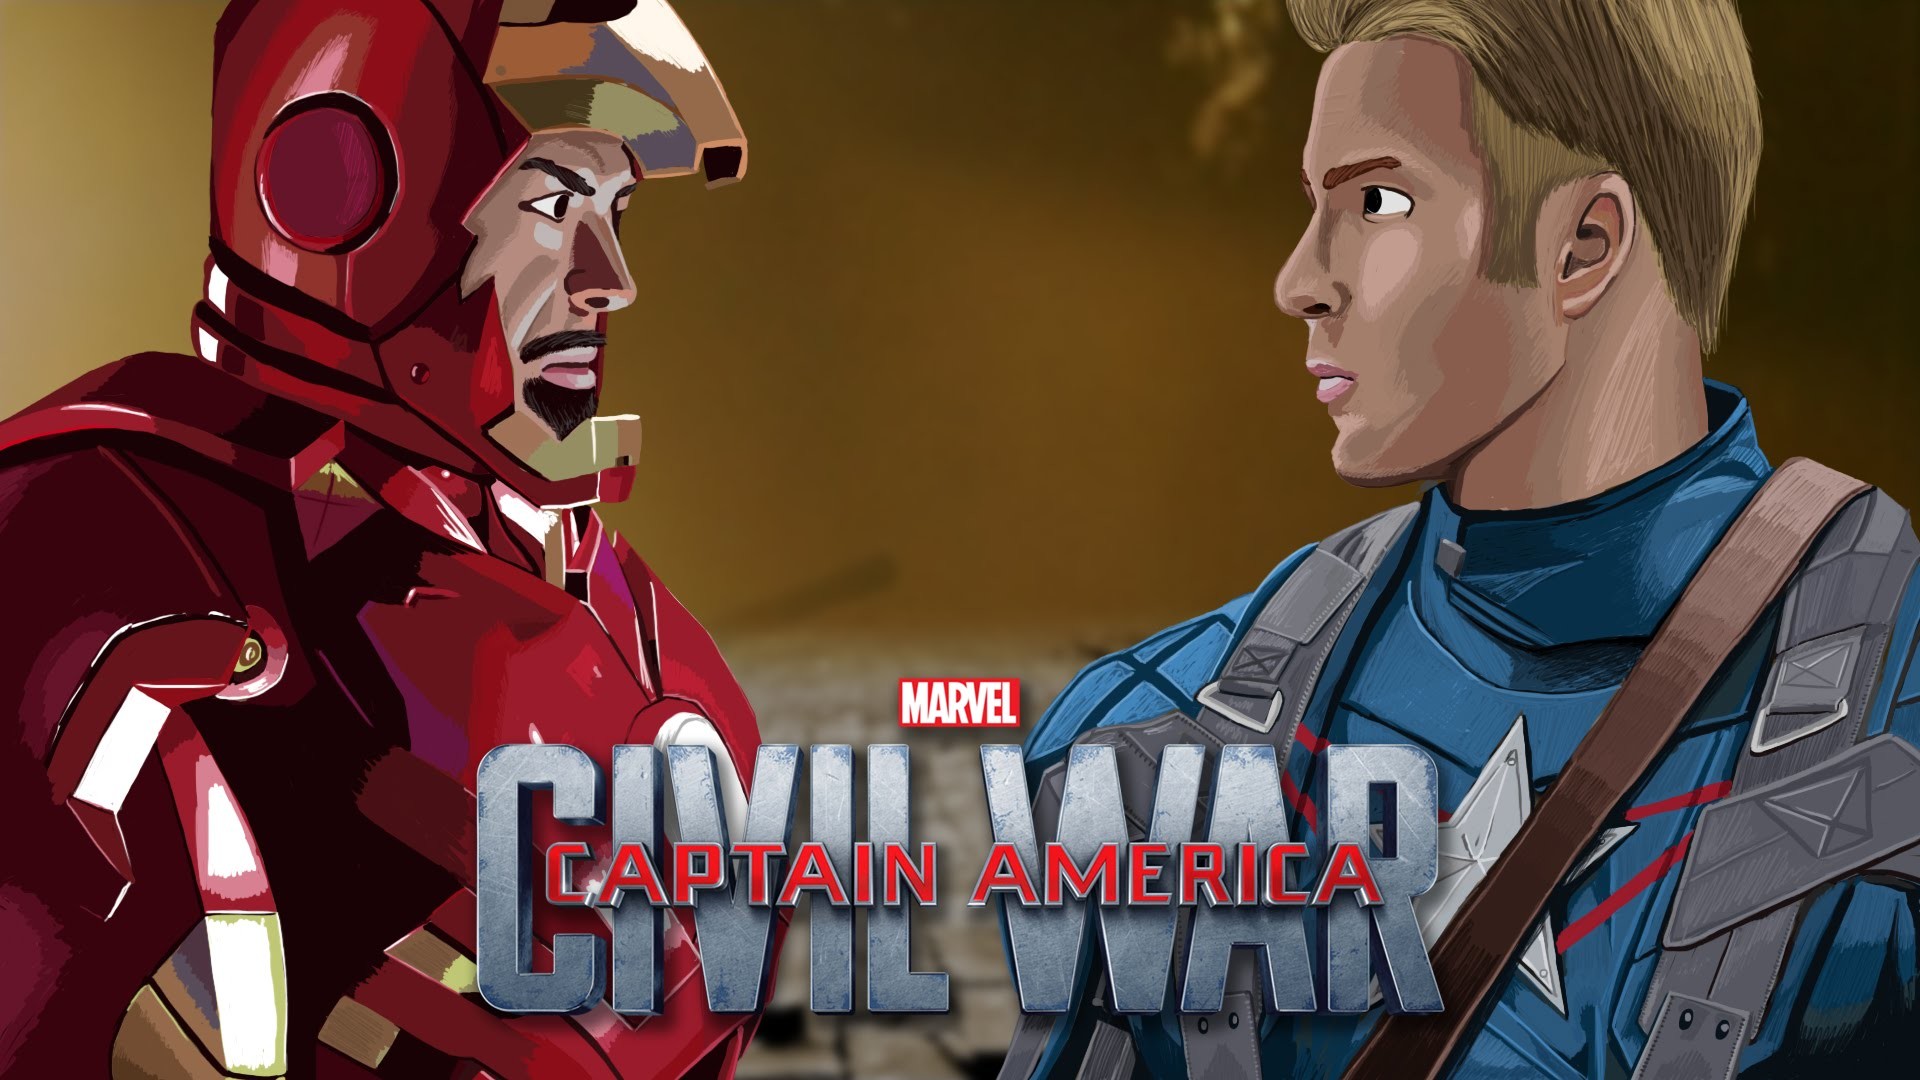 1920x1080 Captain America Civil War | Free Wallpaper | Brandon King Designs - YouTube